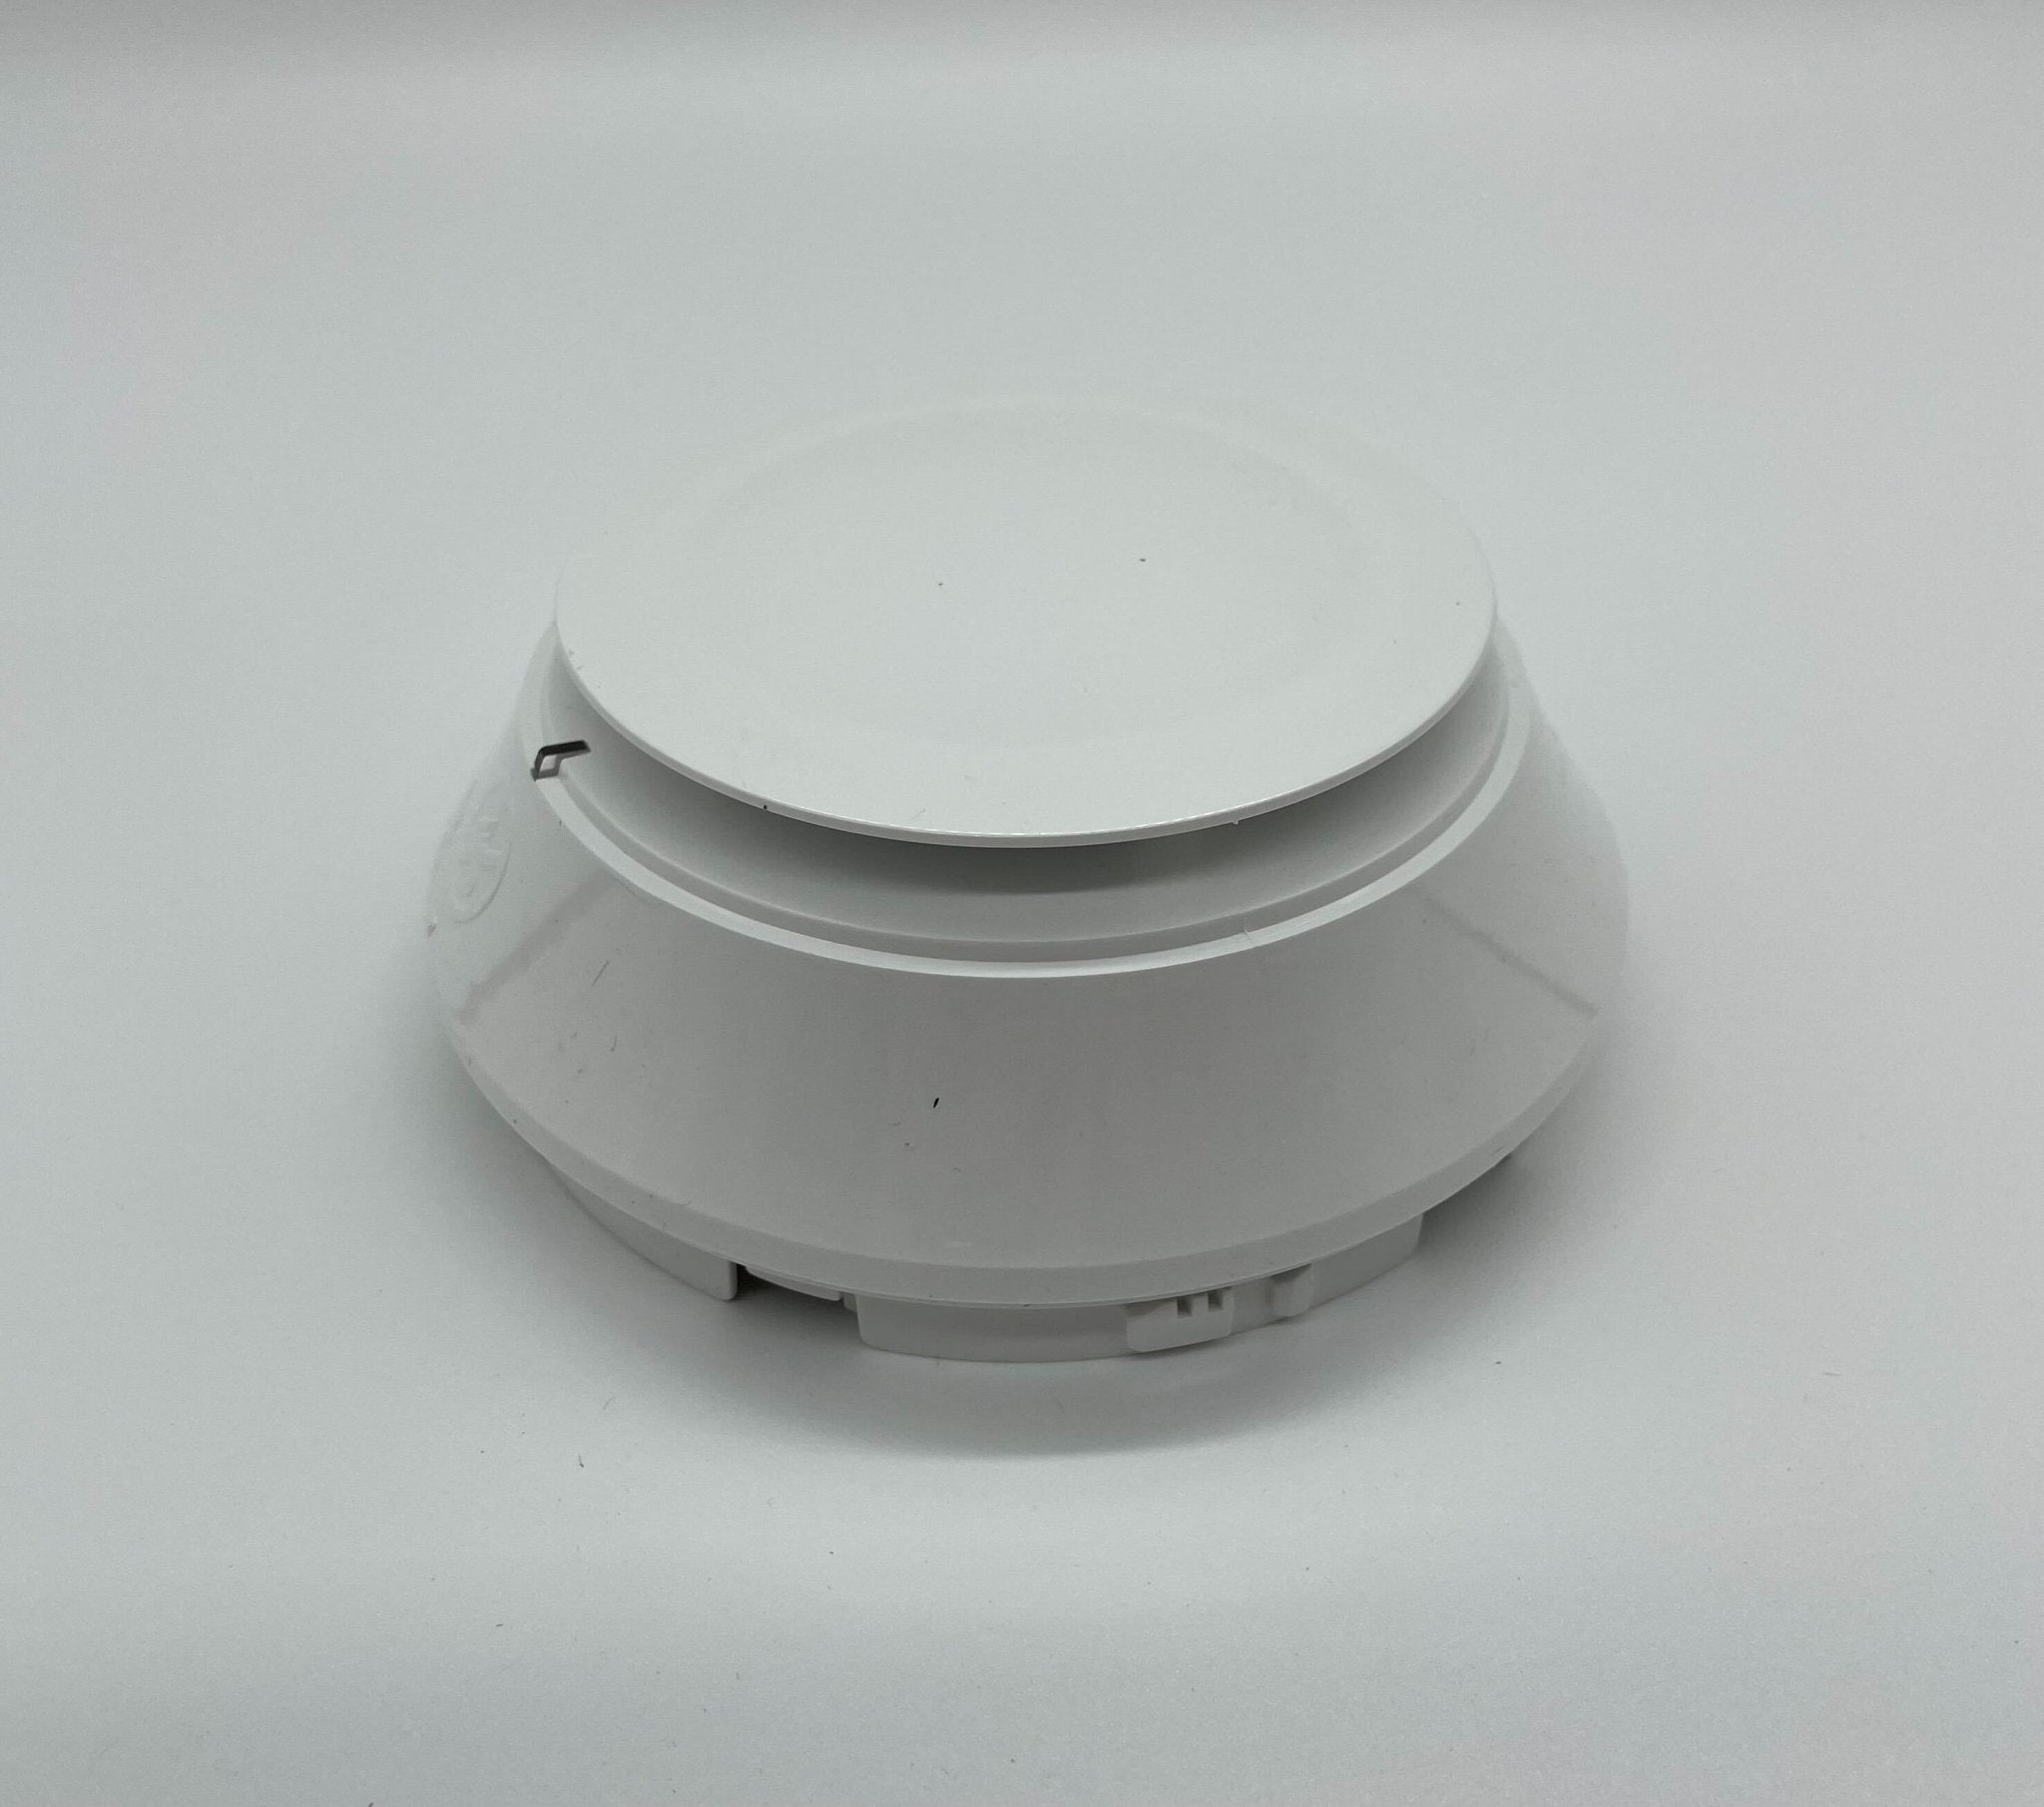 Mircom MIX-2351AP - The Fire Alarm Supplier